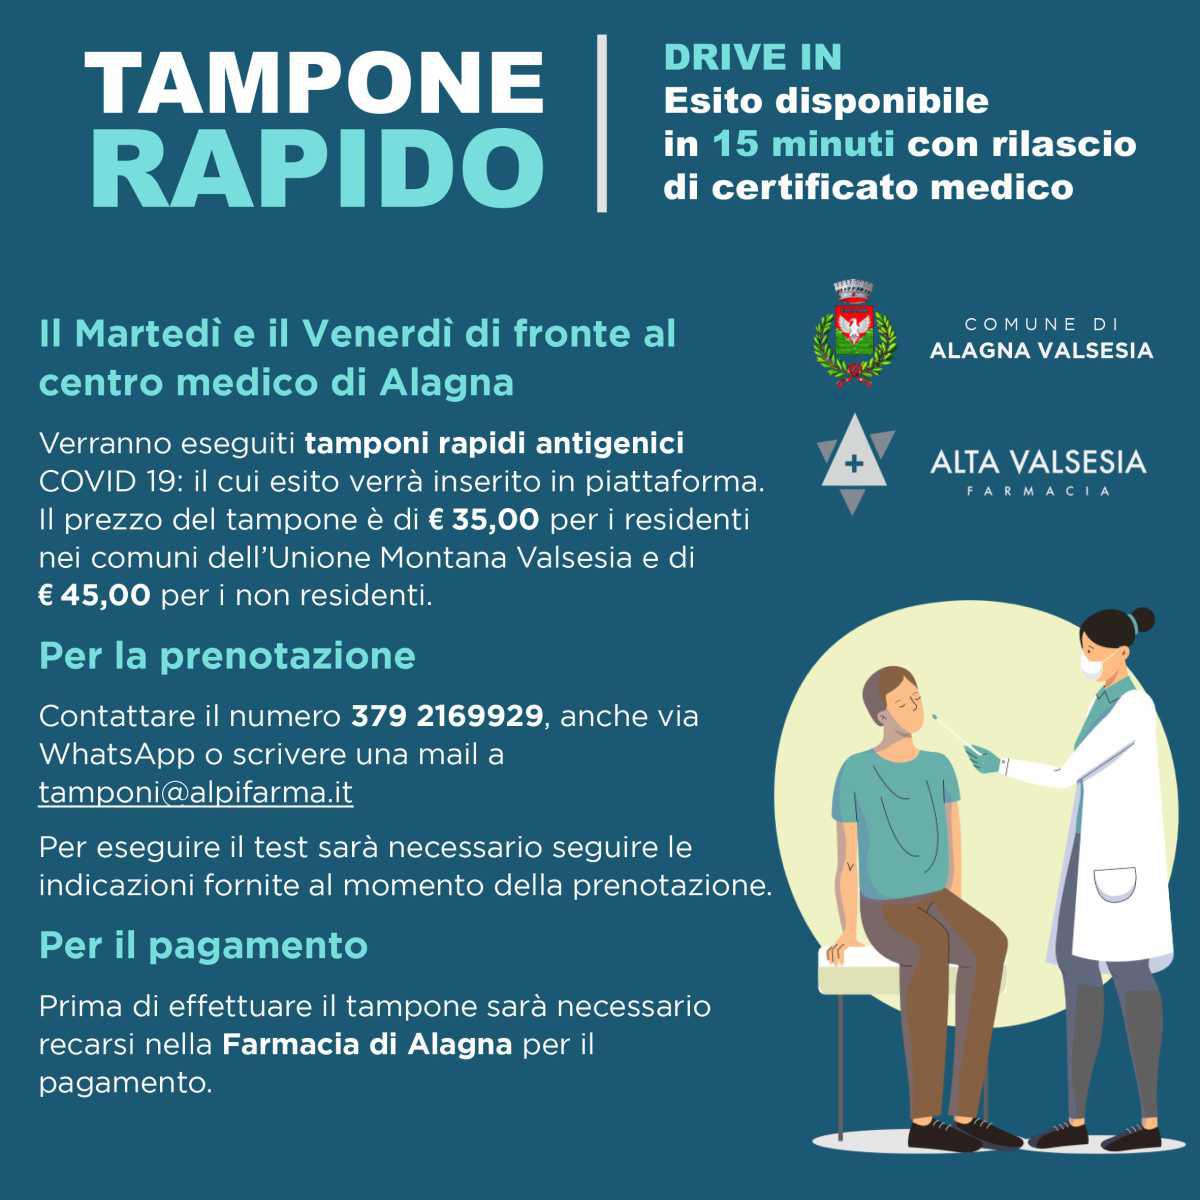 Tampone rapido "drive-in" ad Alagna Valsesia